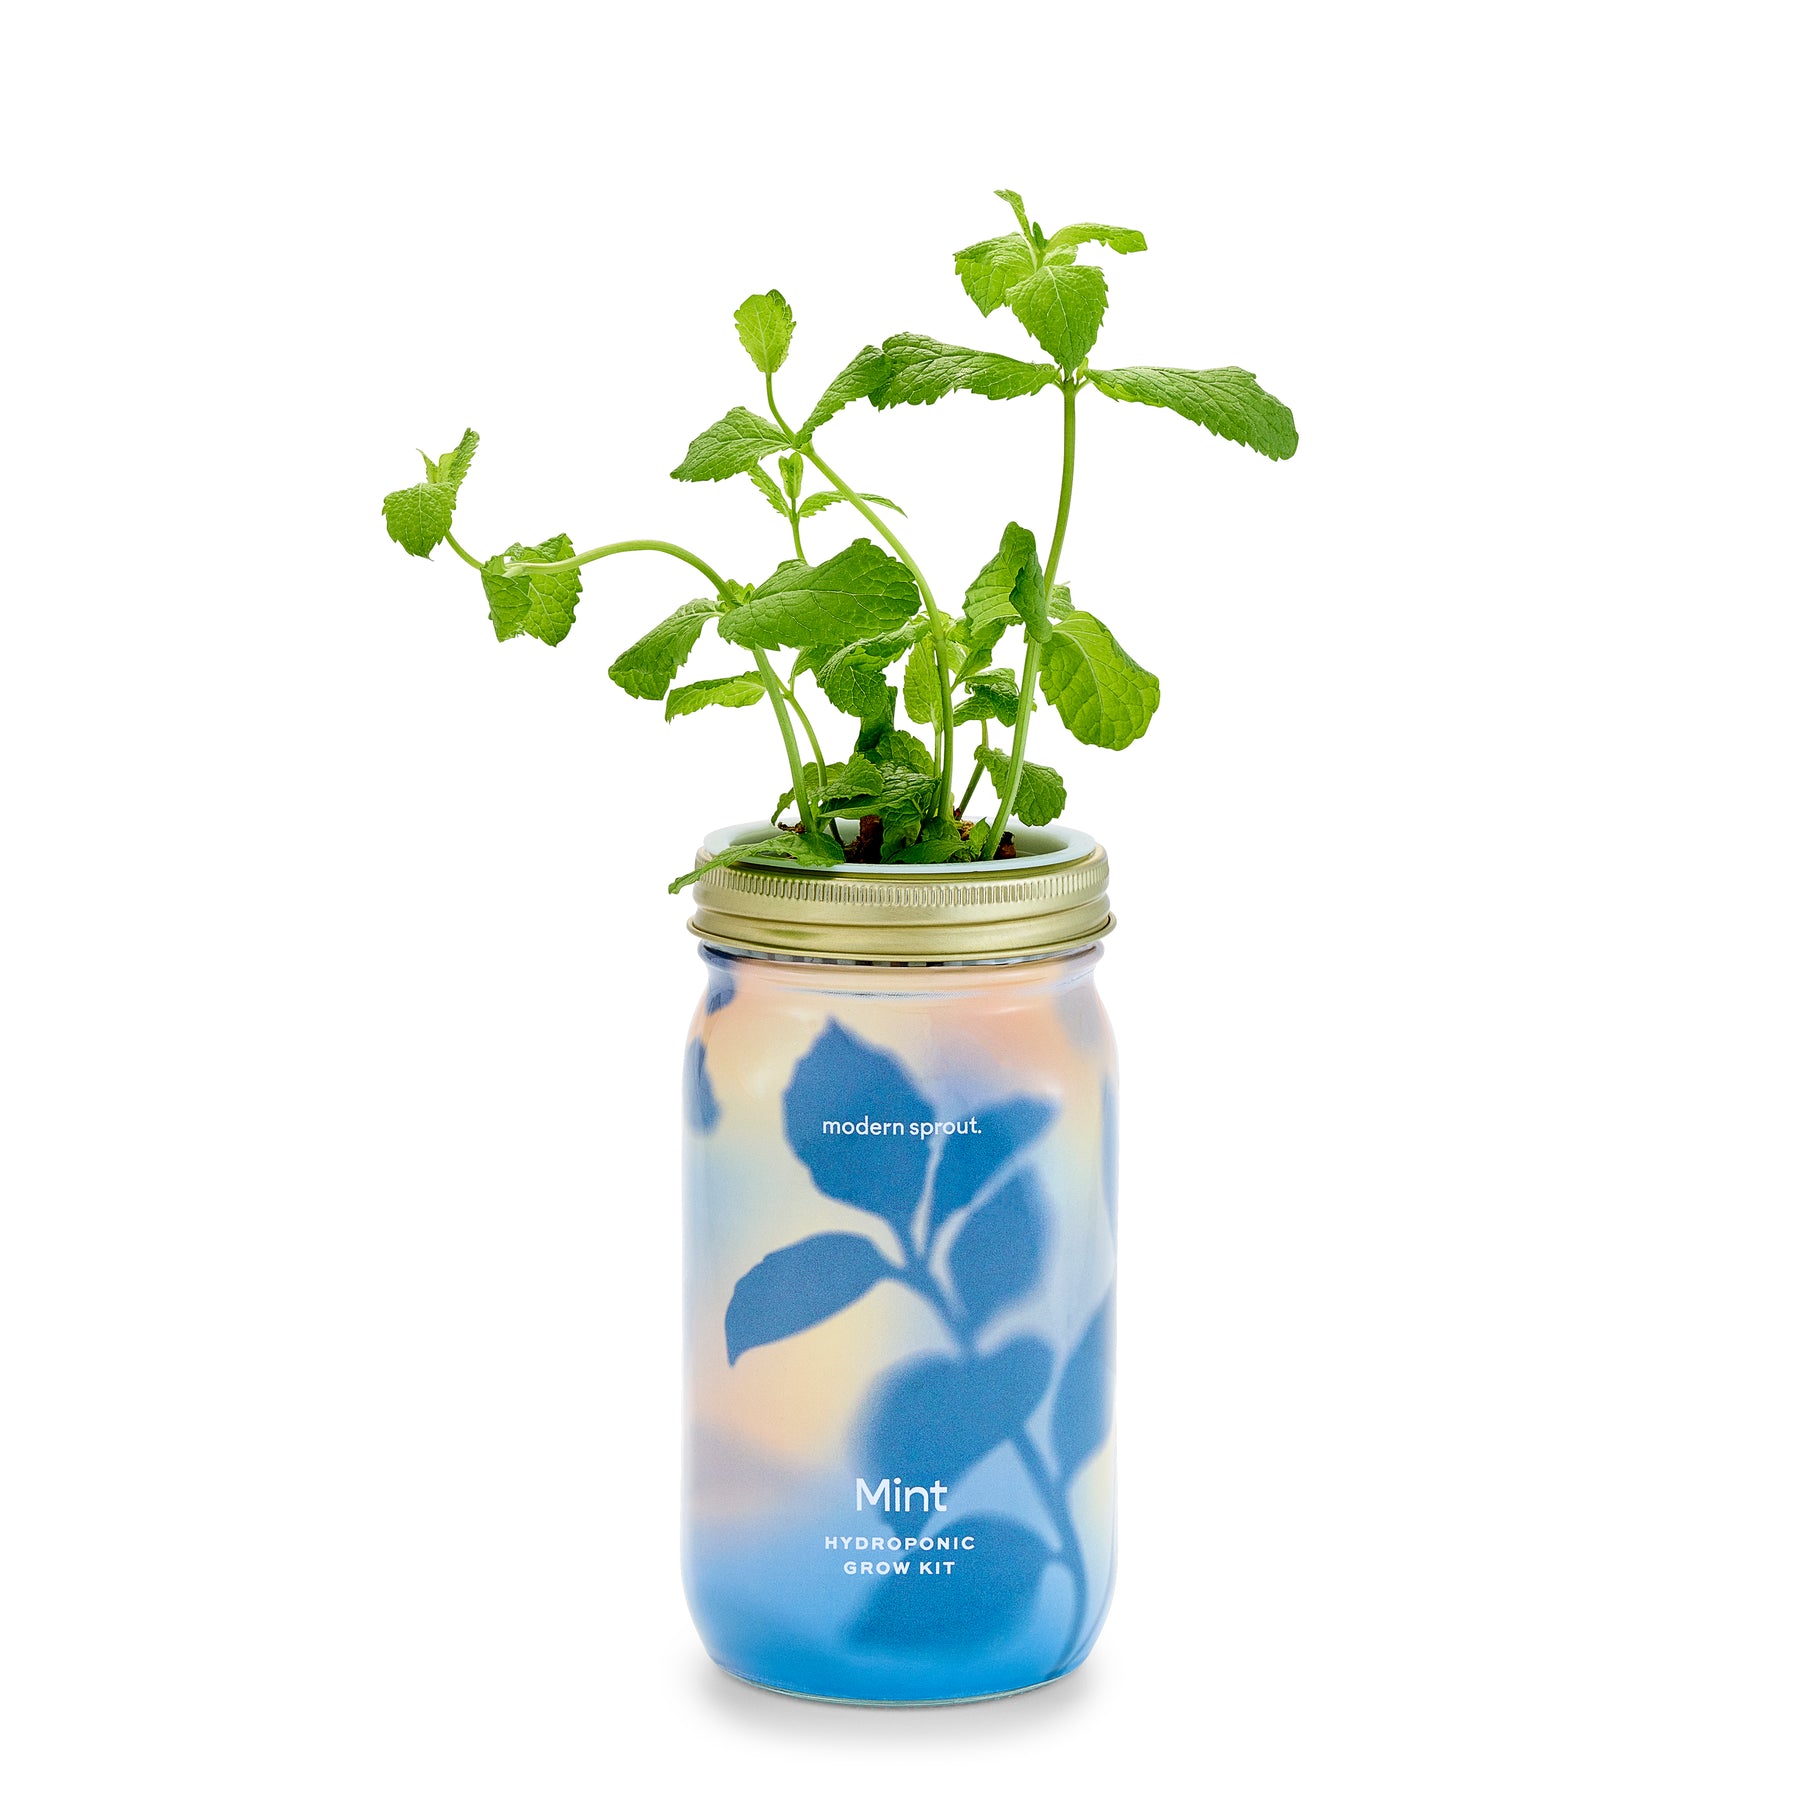 NEW! Garden Jars - Organic Herbs